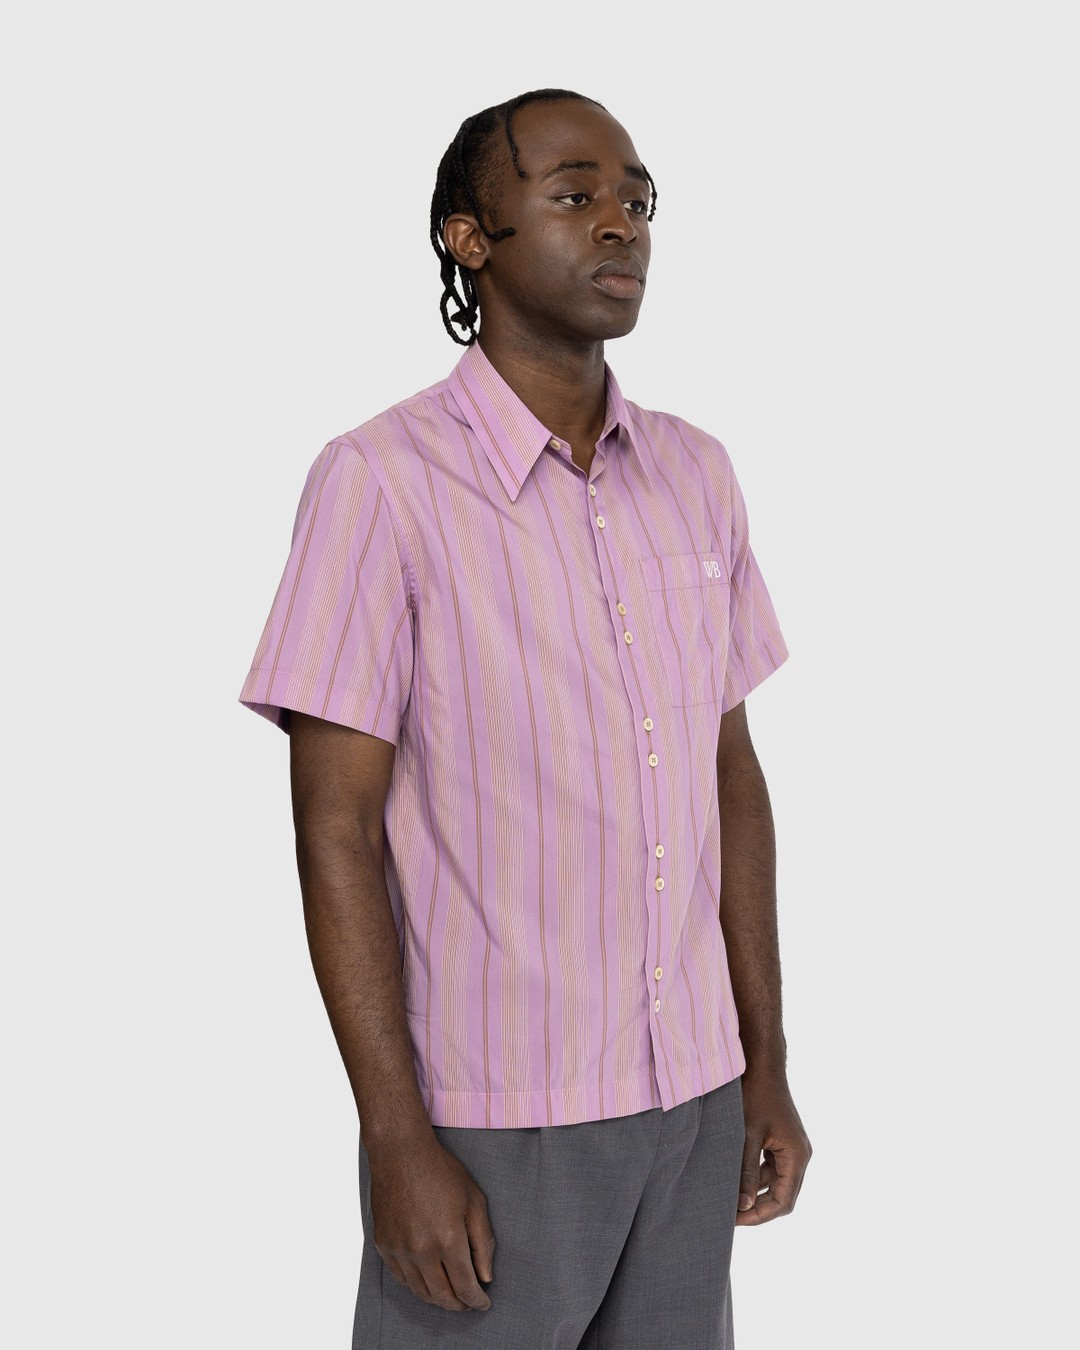 Wales Bonner – Rhythm Striped Shirt Pink - Shortsleeve Shirts - Pink - Image 4